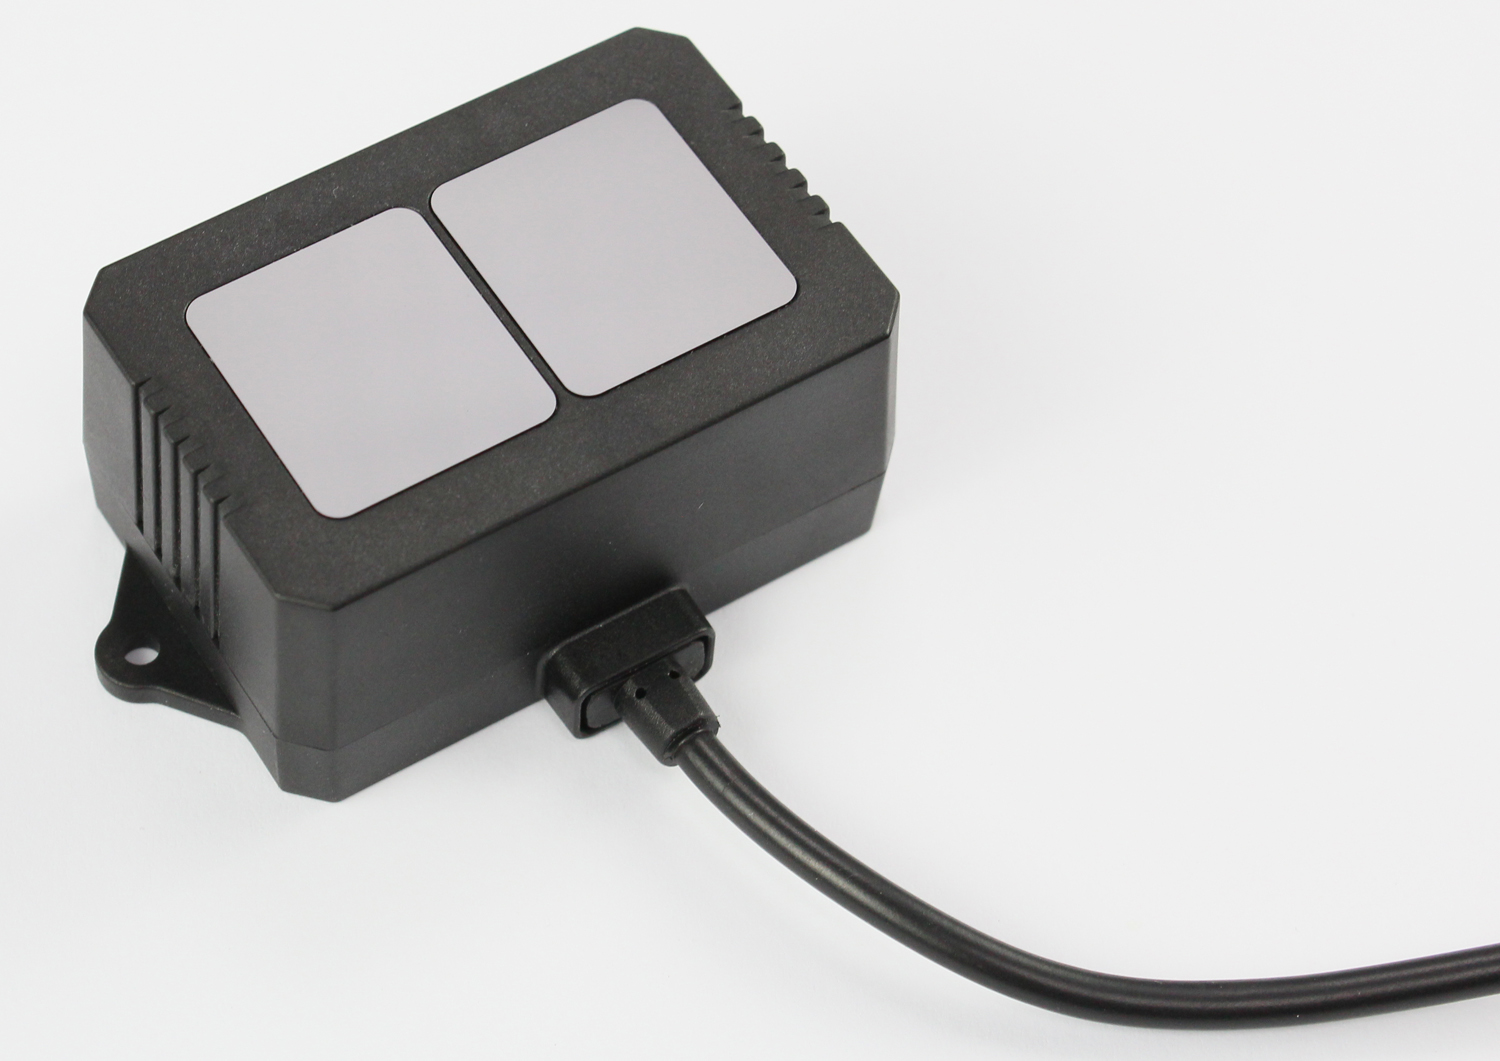 Benewake TF02-Pro LIDAR LED Rangefinder IP65 (40m) - Click to Enlarge